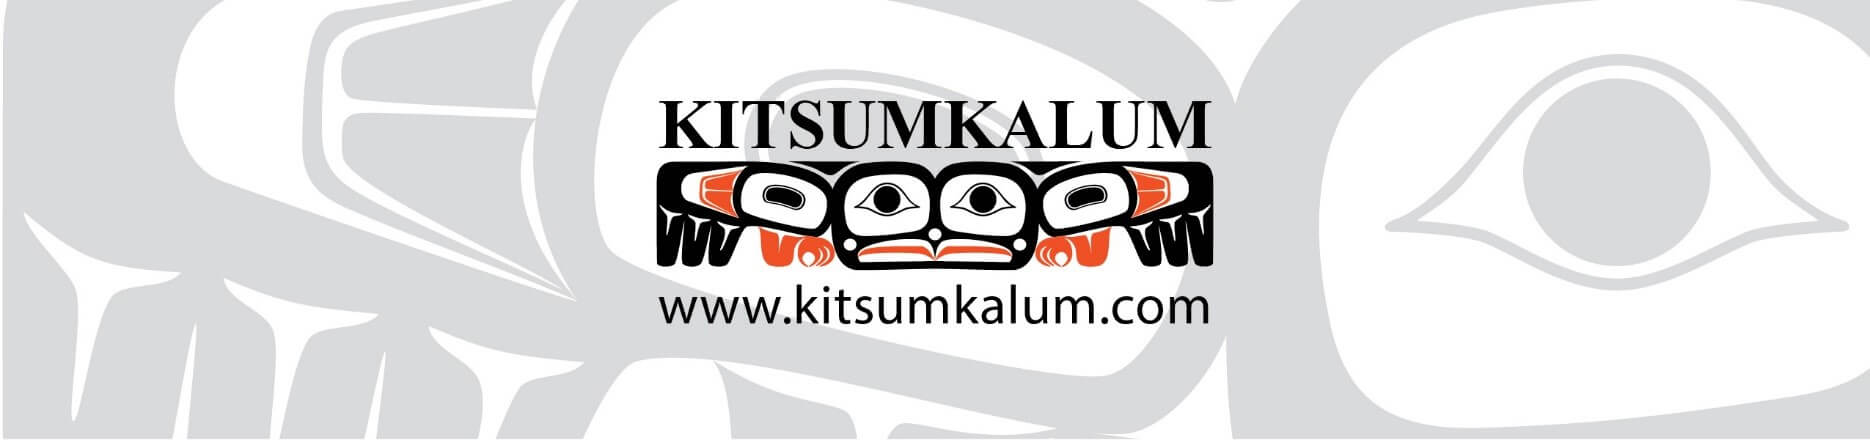 Confirmed COVID Cases in Kitsumkalum